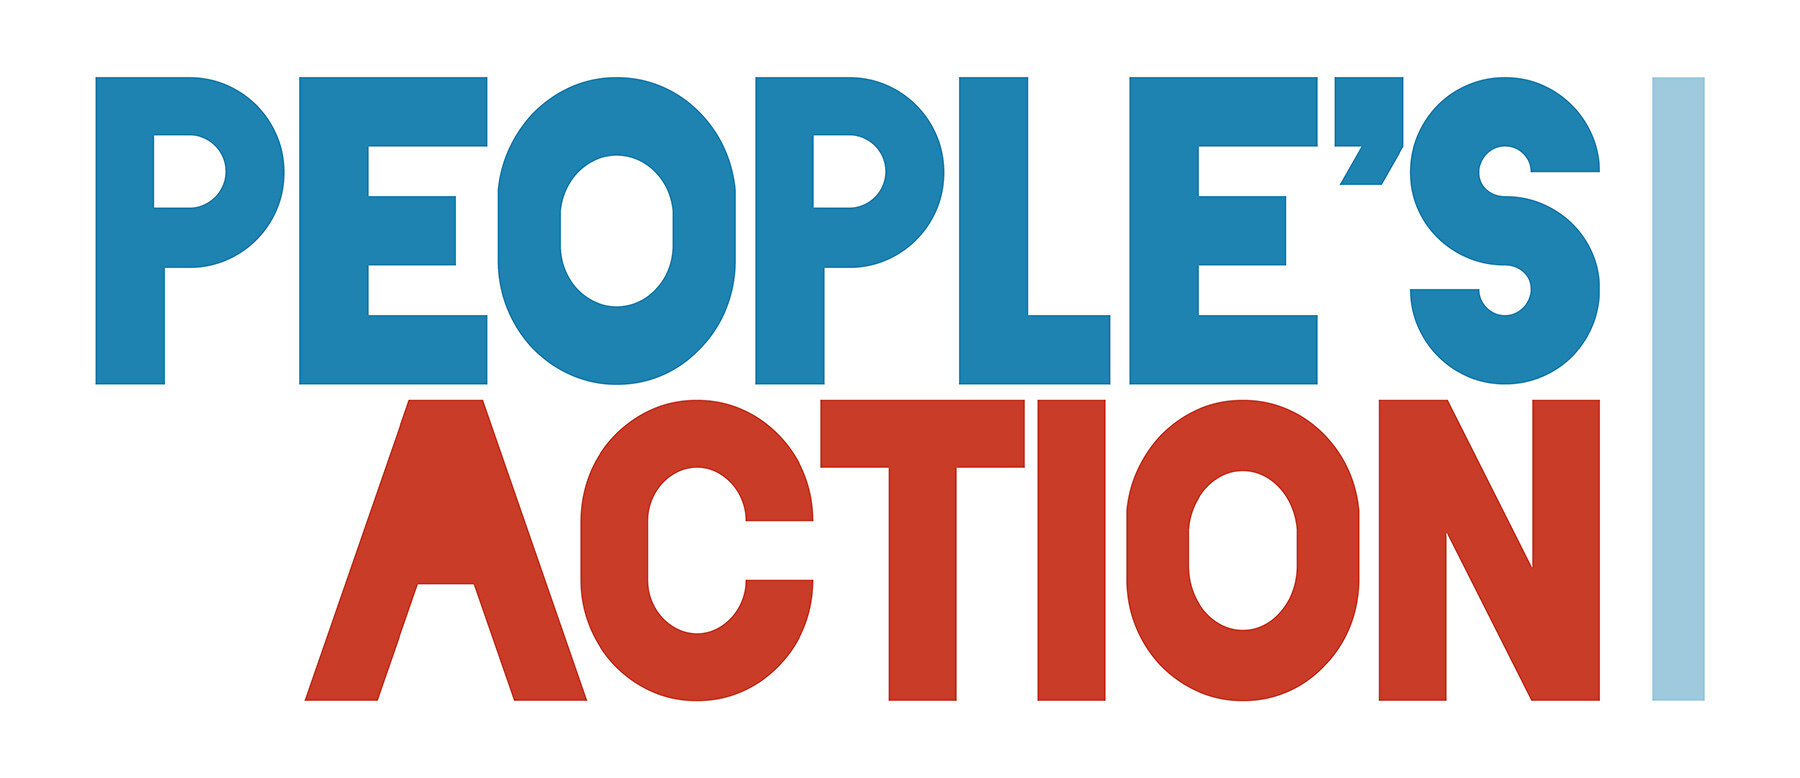 PeoplesAction logo.jpg